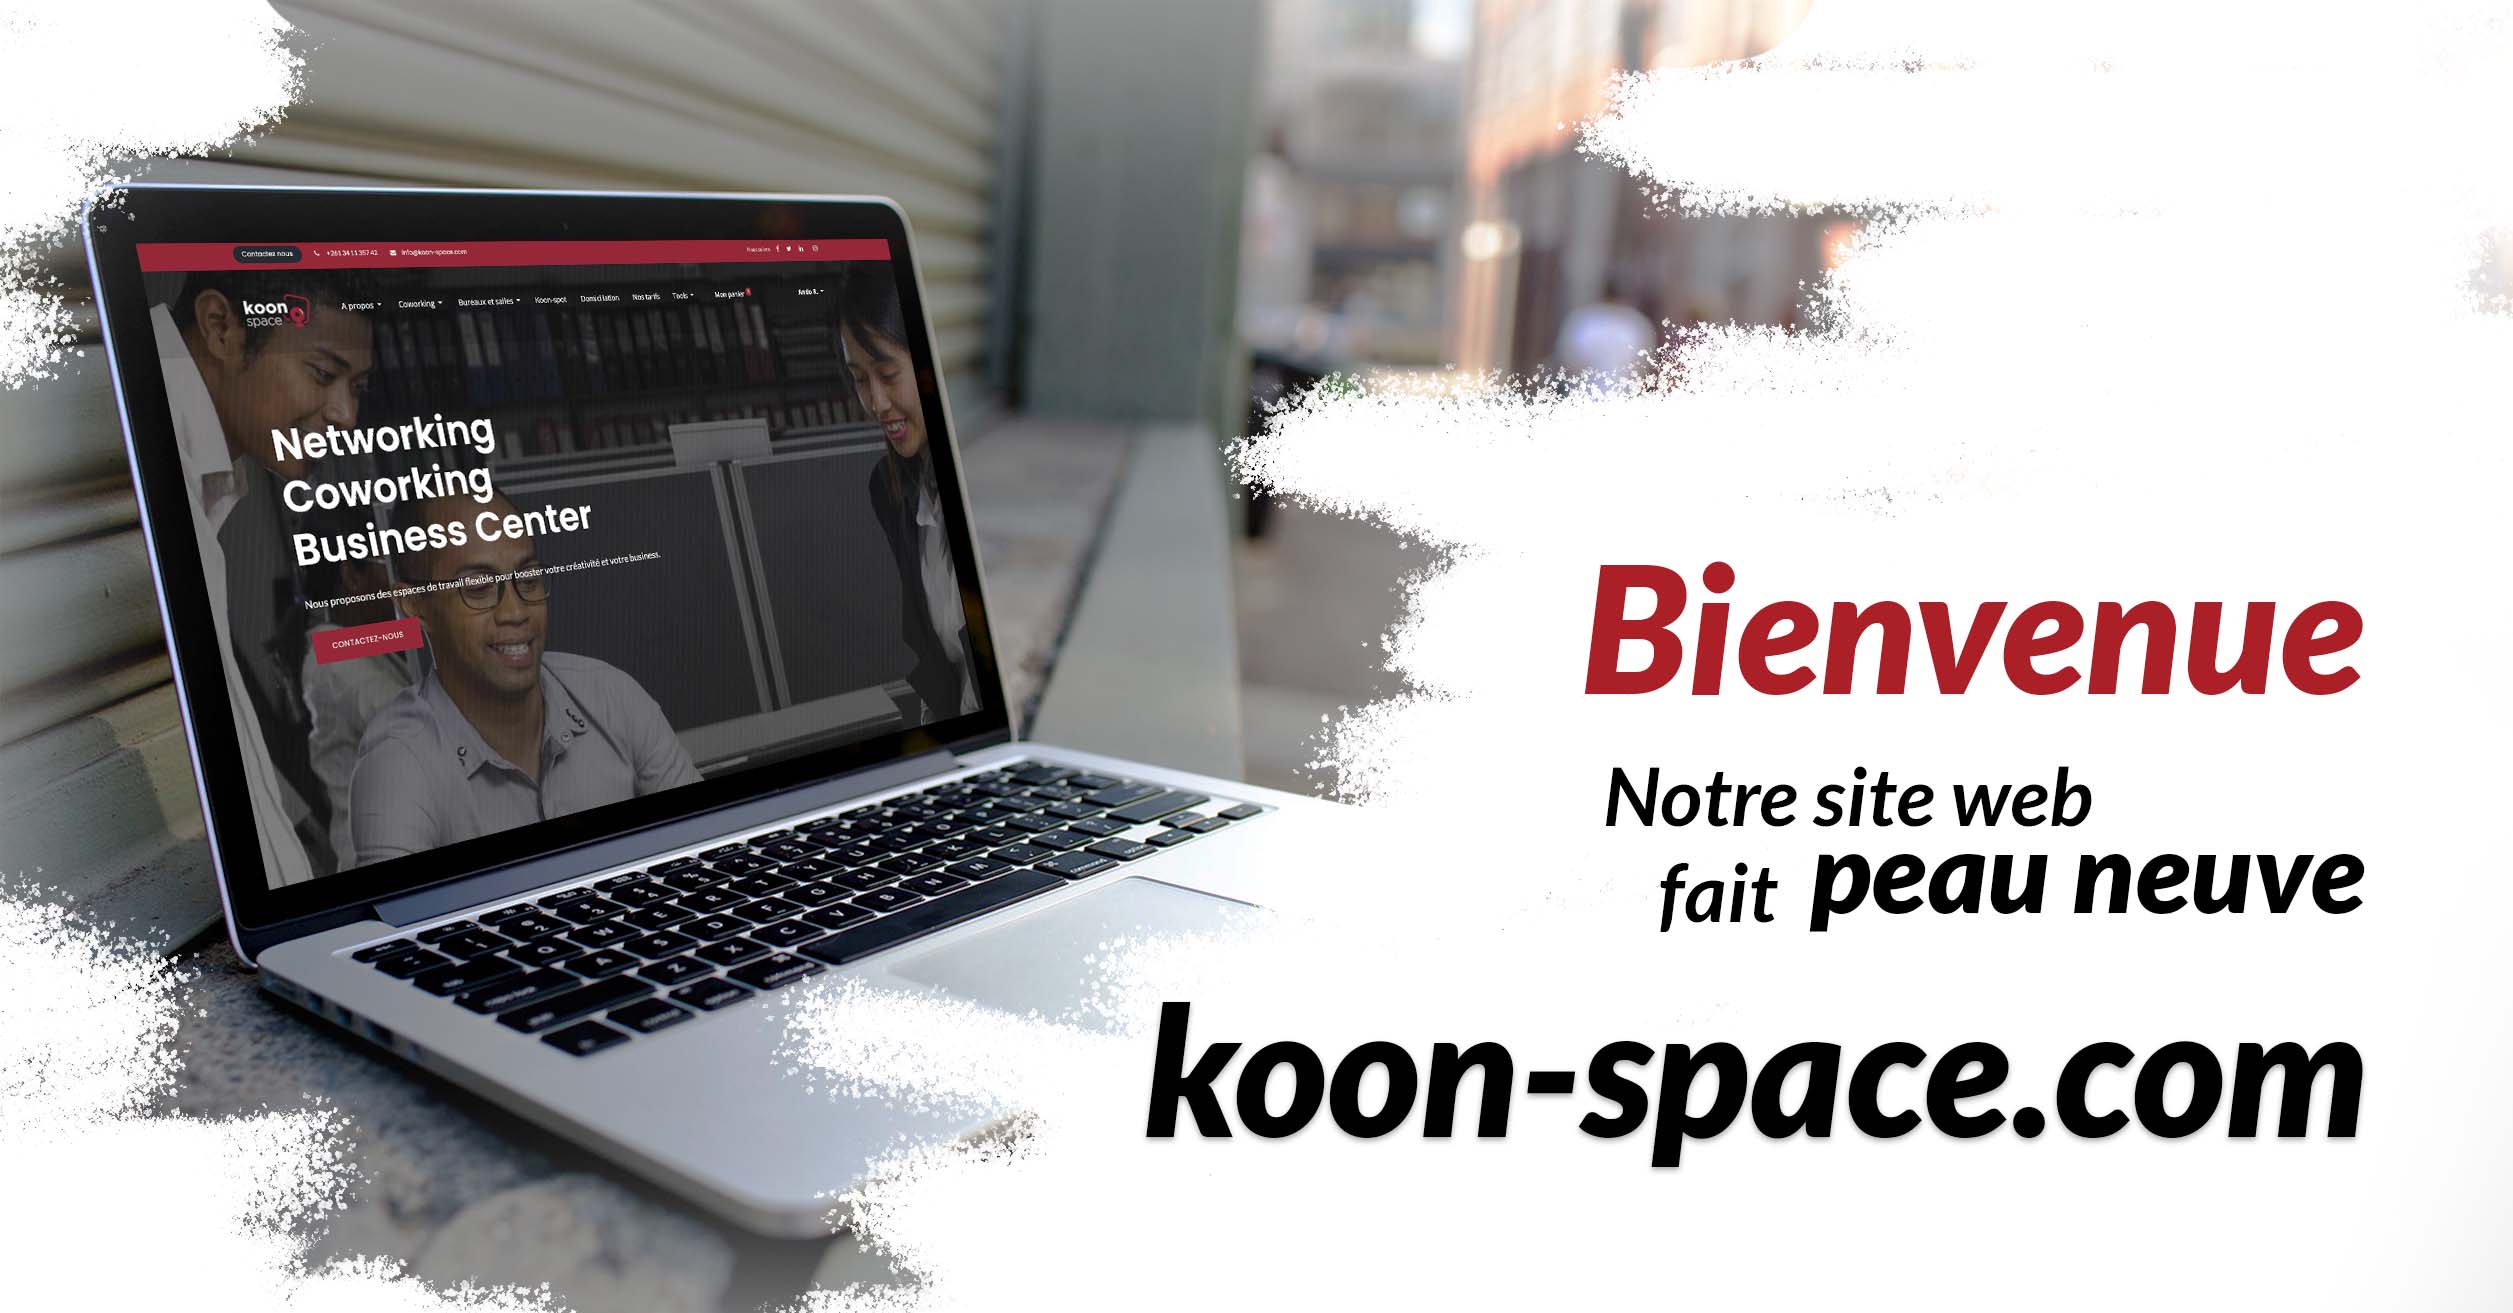 (c) Koon-space.com